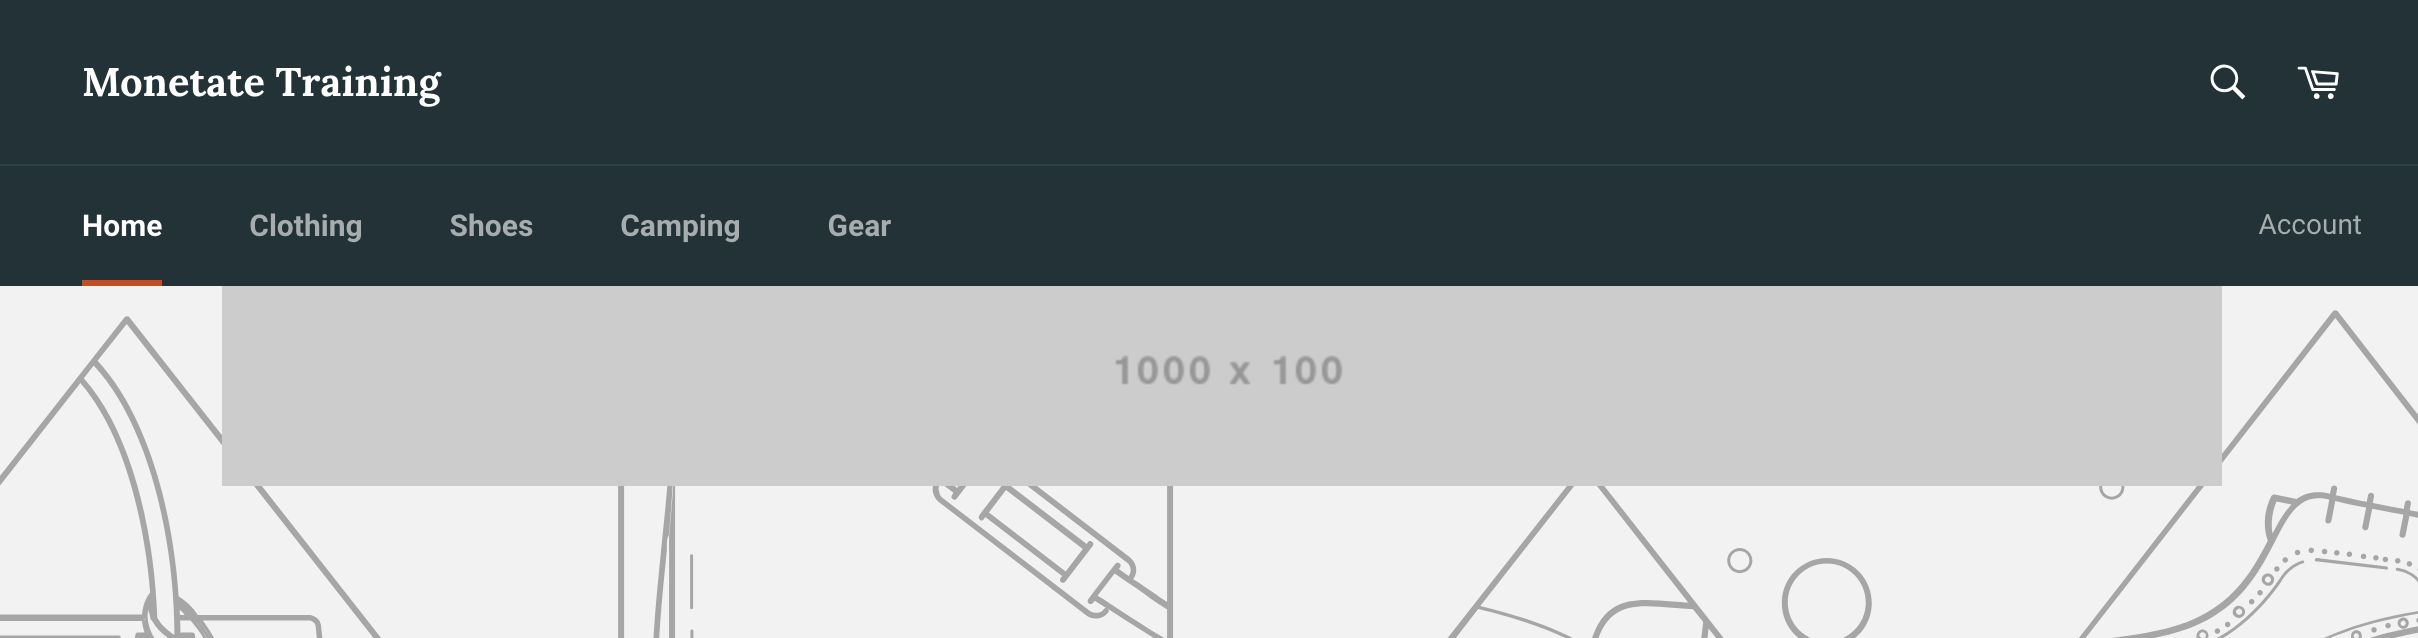 A 1000 by 100 pixel banner placeholder below the top navigation bar of an online retailer's site